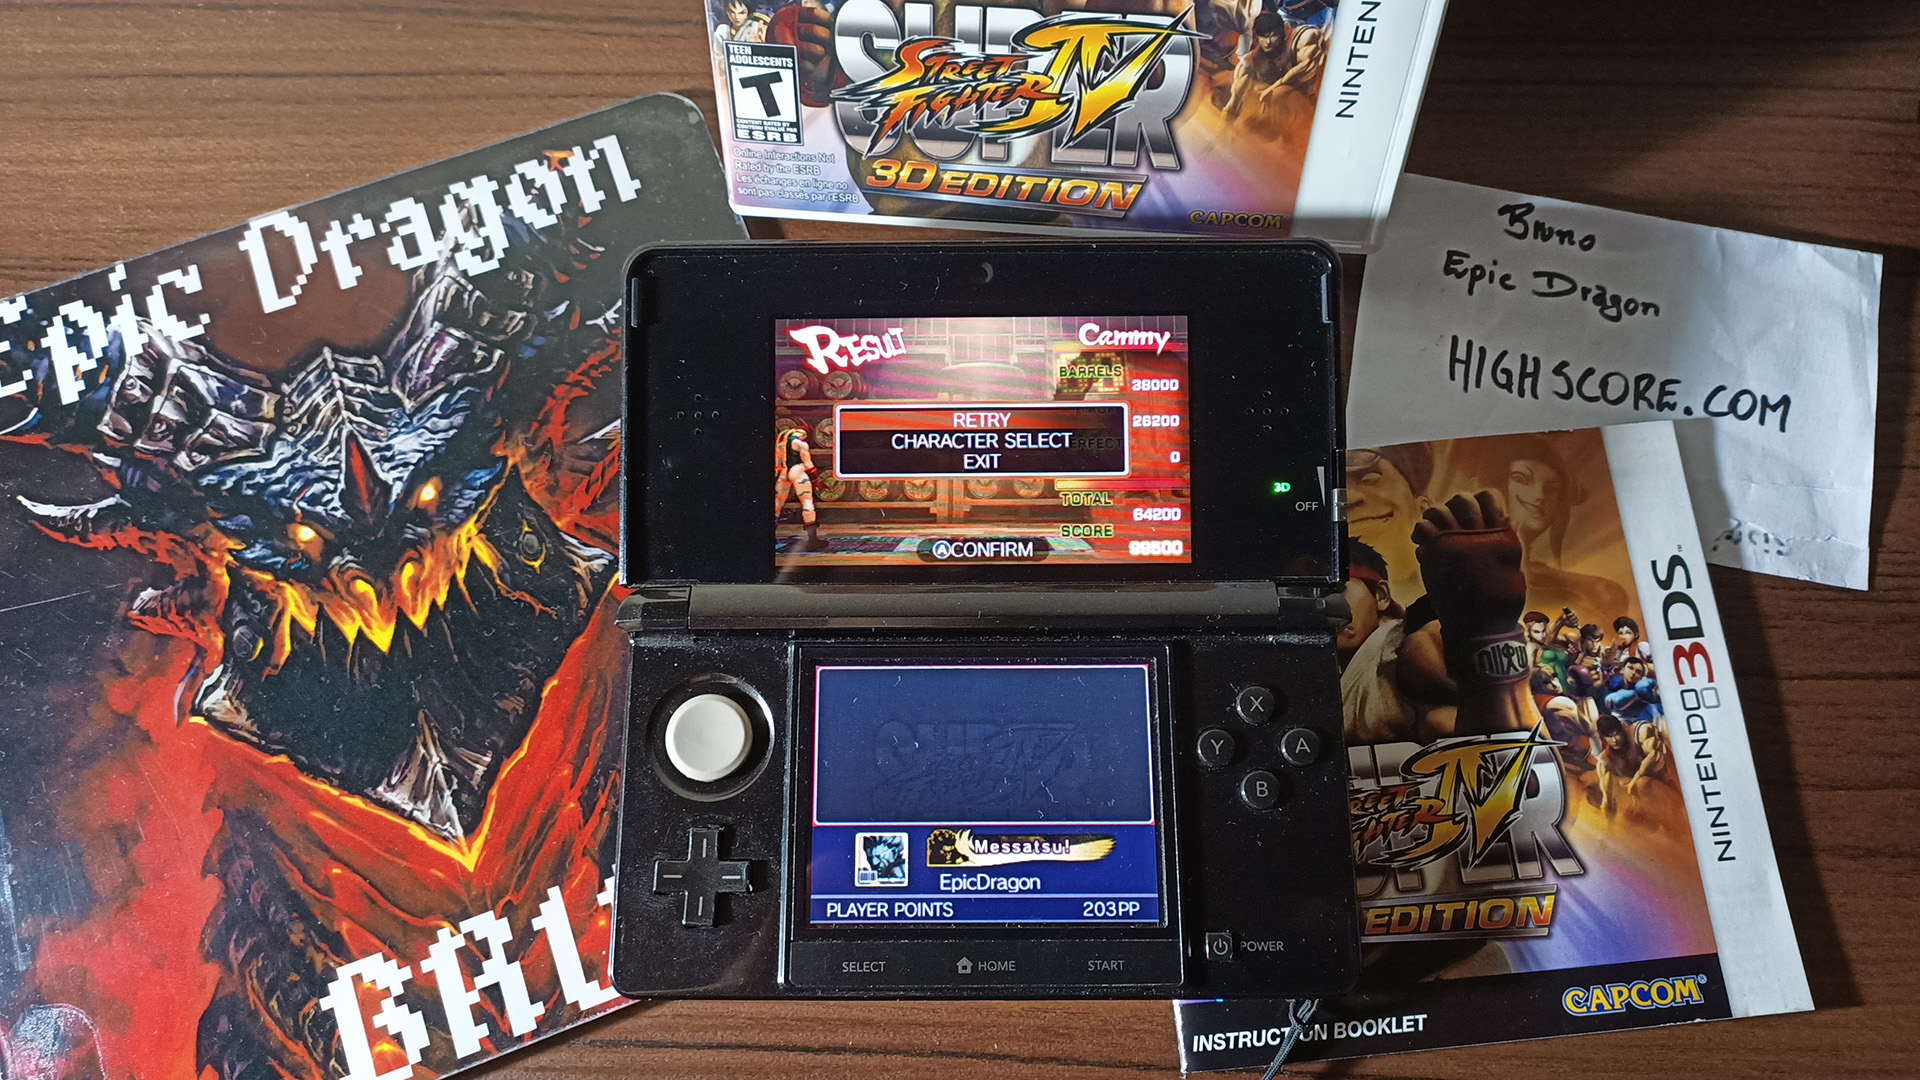 EpicDragon: Super Street Fighter IV 3D Edition: Challenge: Barrel Buster [Cammy] (Nintendo 3DS) 99,500 points on 2022-08-01 20:54:08